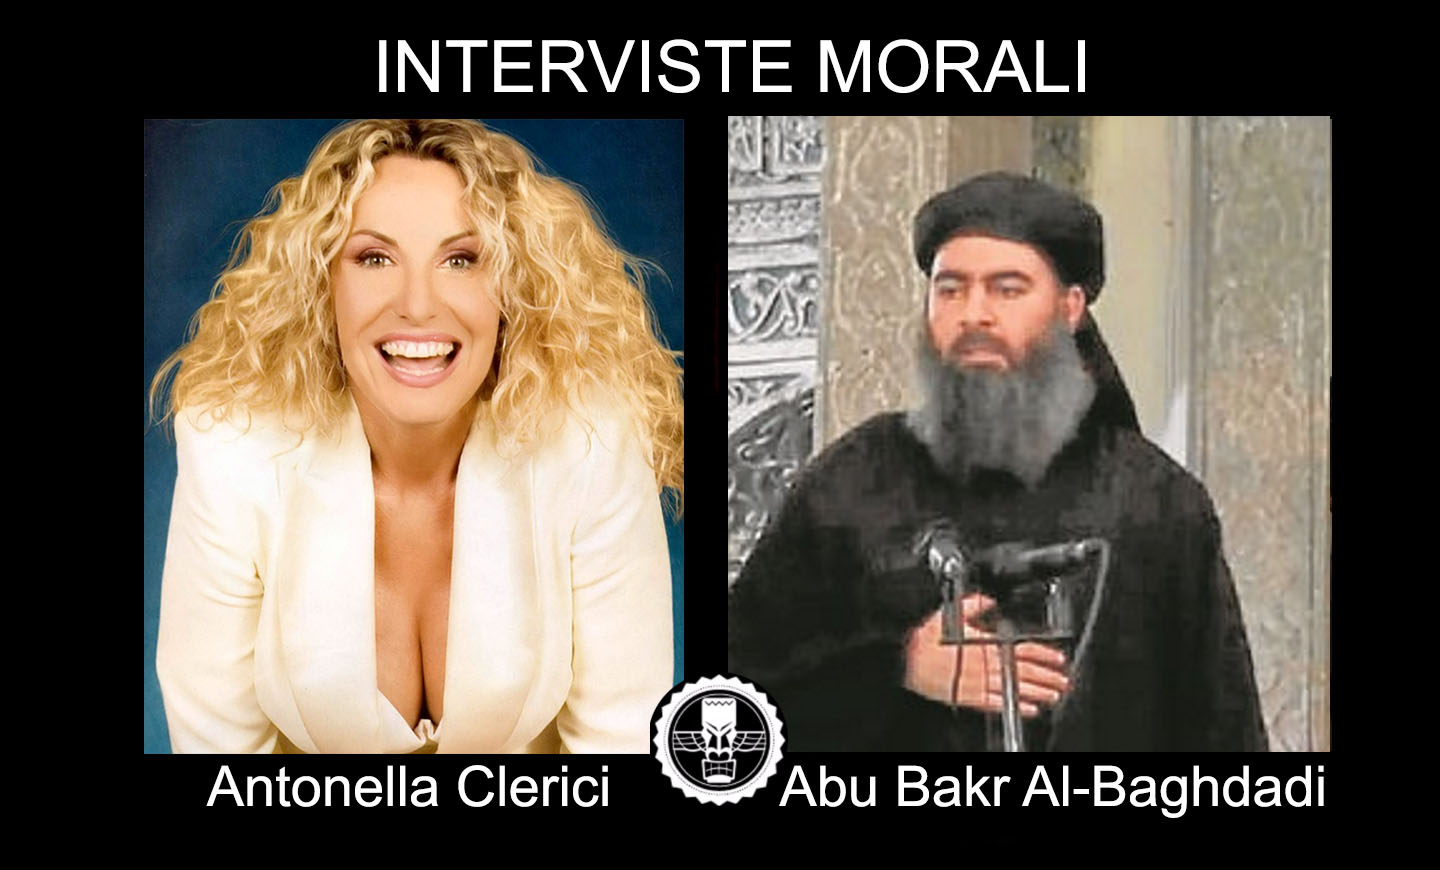 Interviste Morali /3. Antonella Clerici intervista Abu Bakr al-Baghdadi.